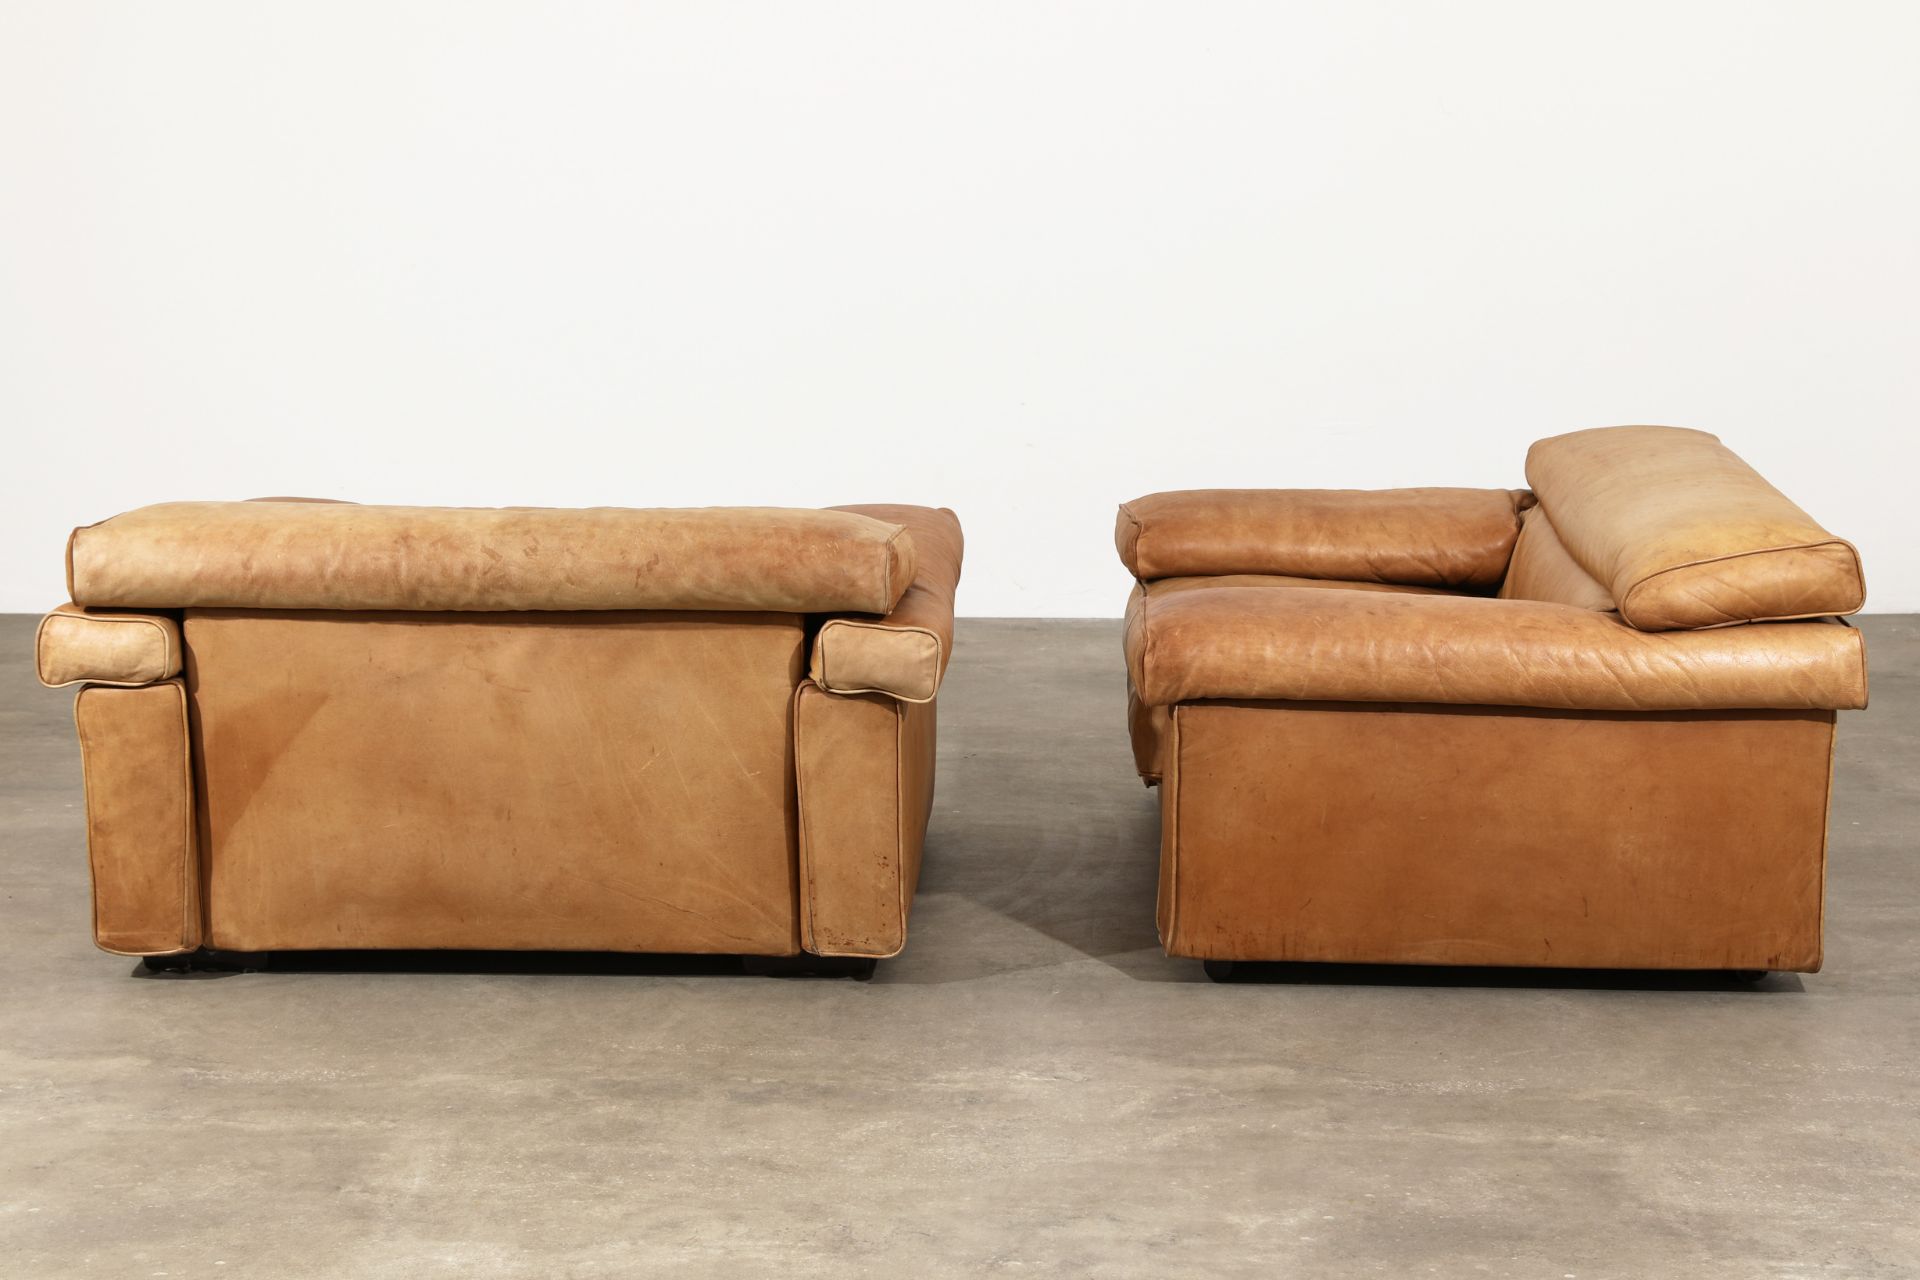 Afra & Tobia Scarpa, B&B Italia, 2 Lounge Chairs, model Erasmo - Image 4 of 4